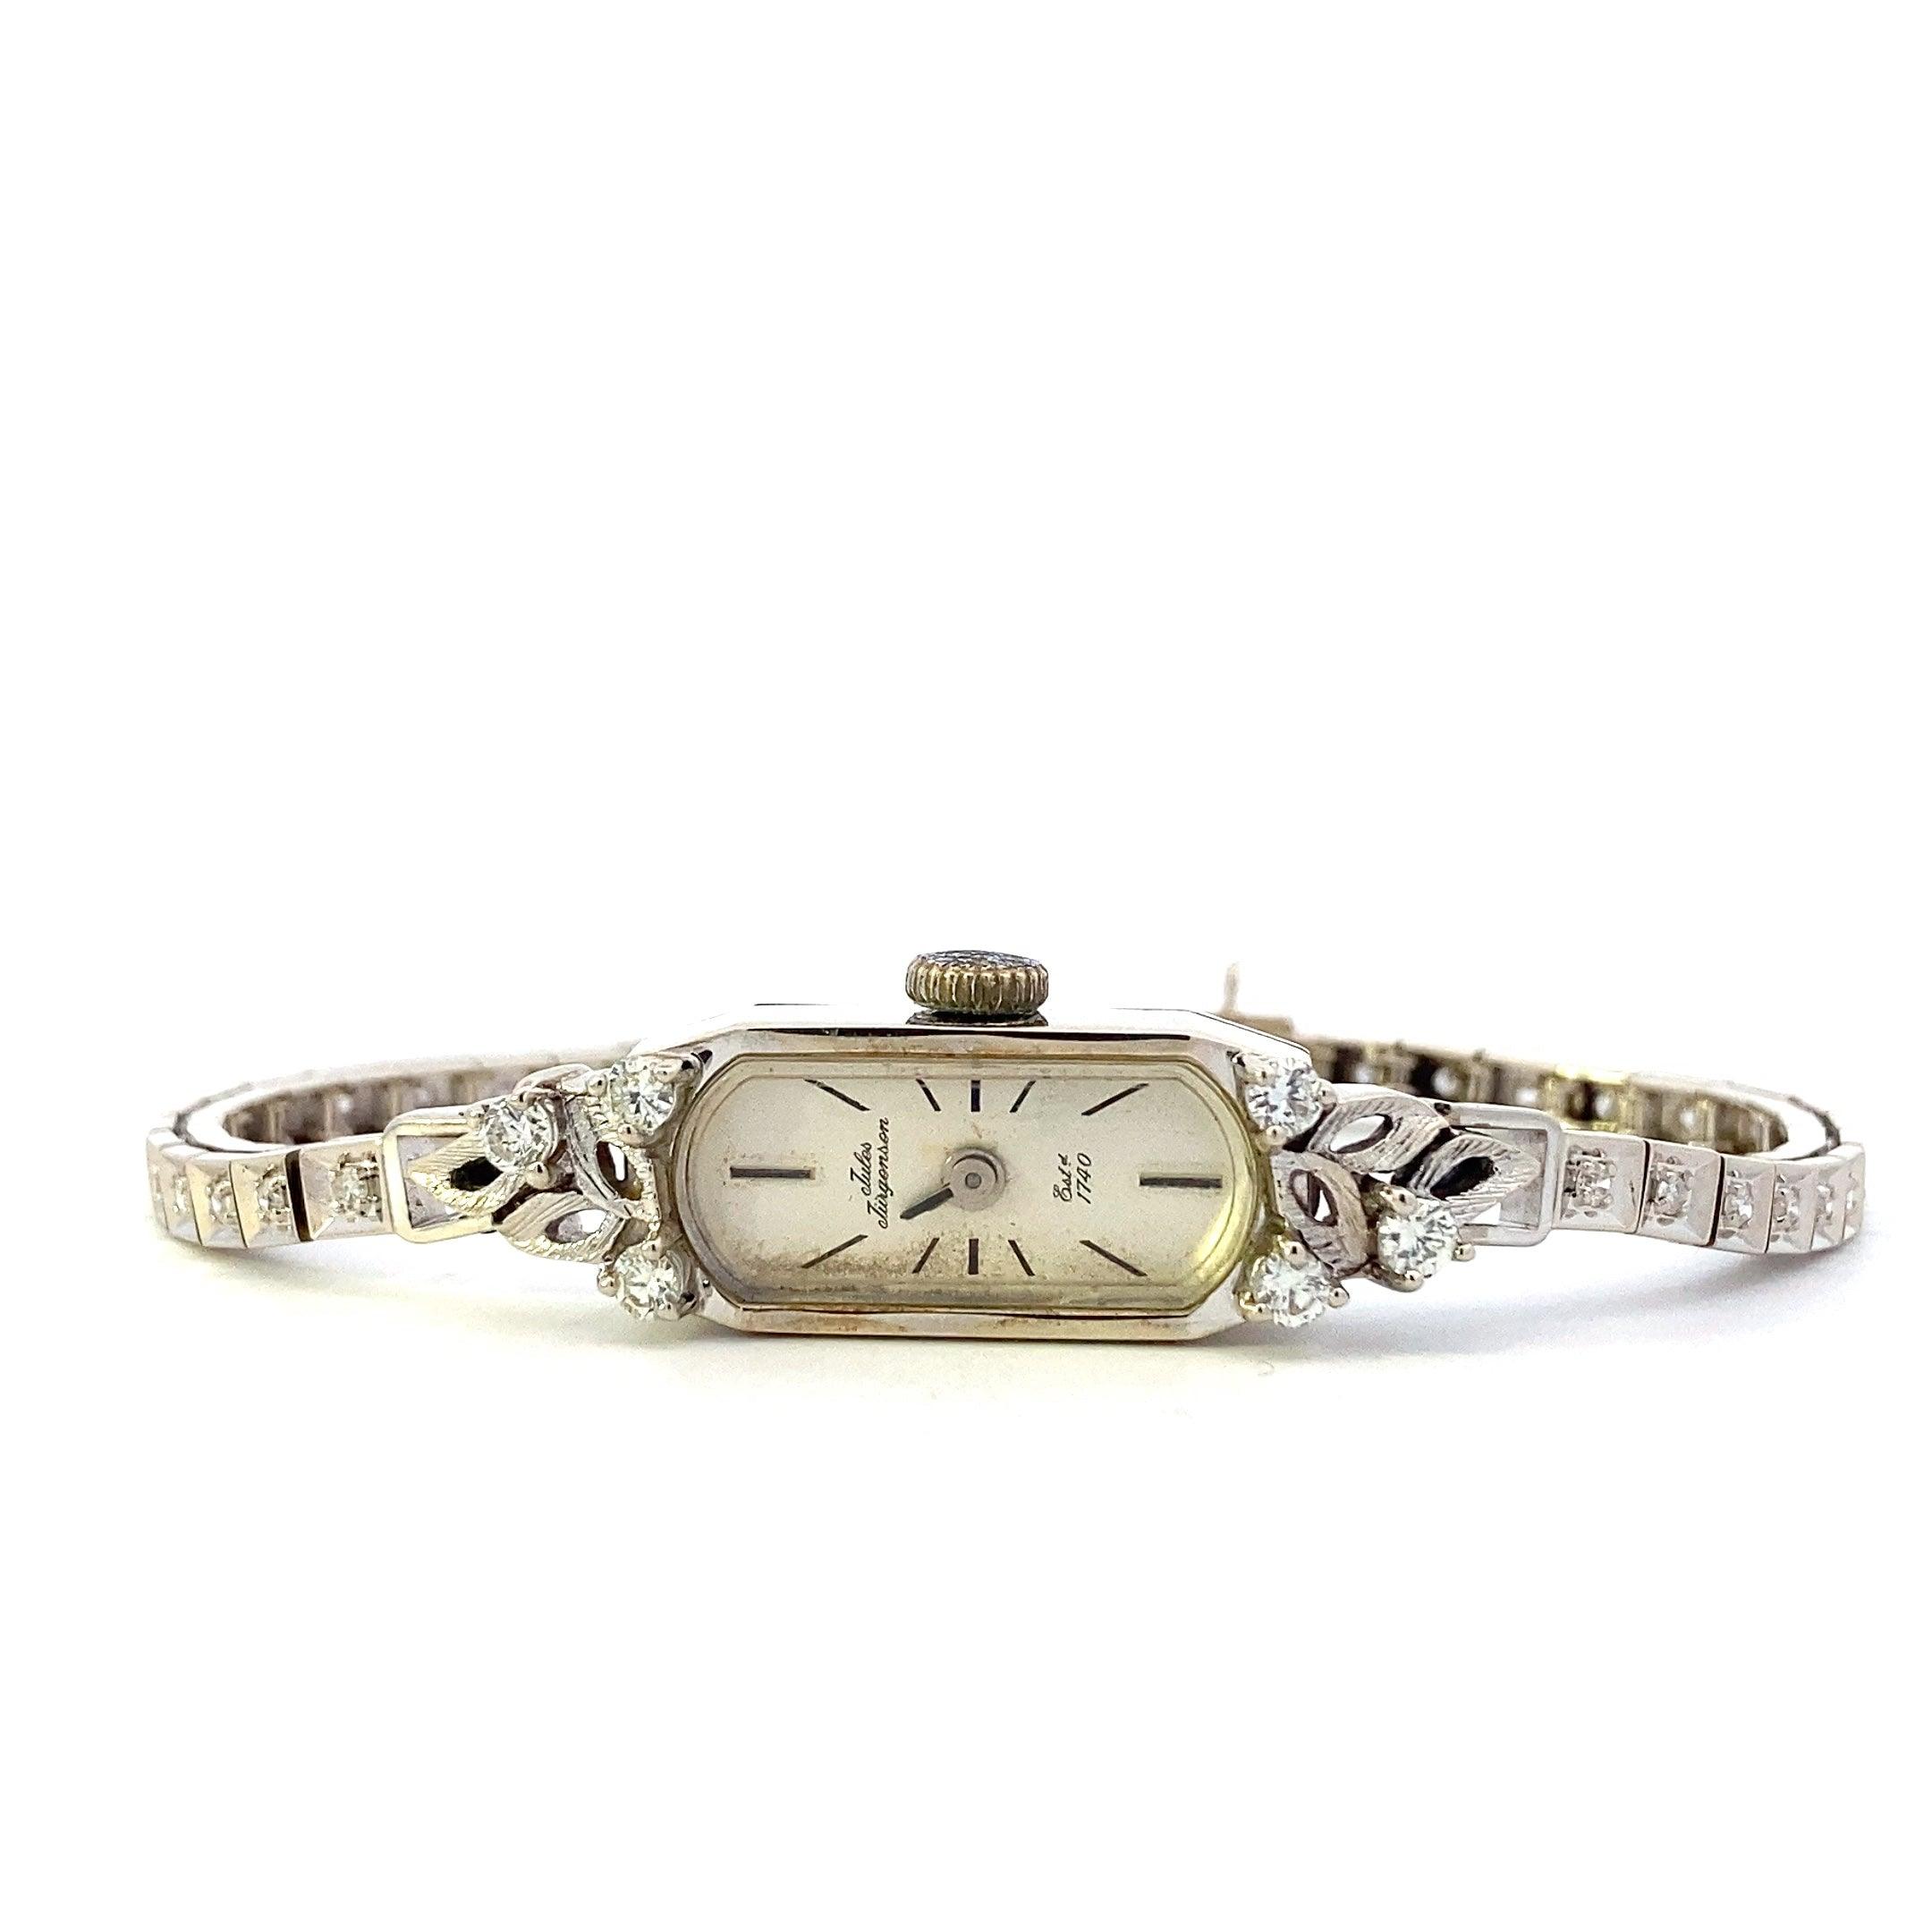 Vintage 14K White Gold Diamond Jules Jurgensen Watch - approx 0.96ct - ipawnishop.com